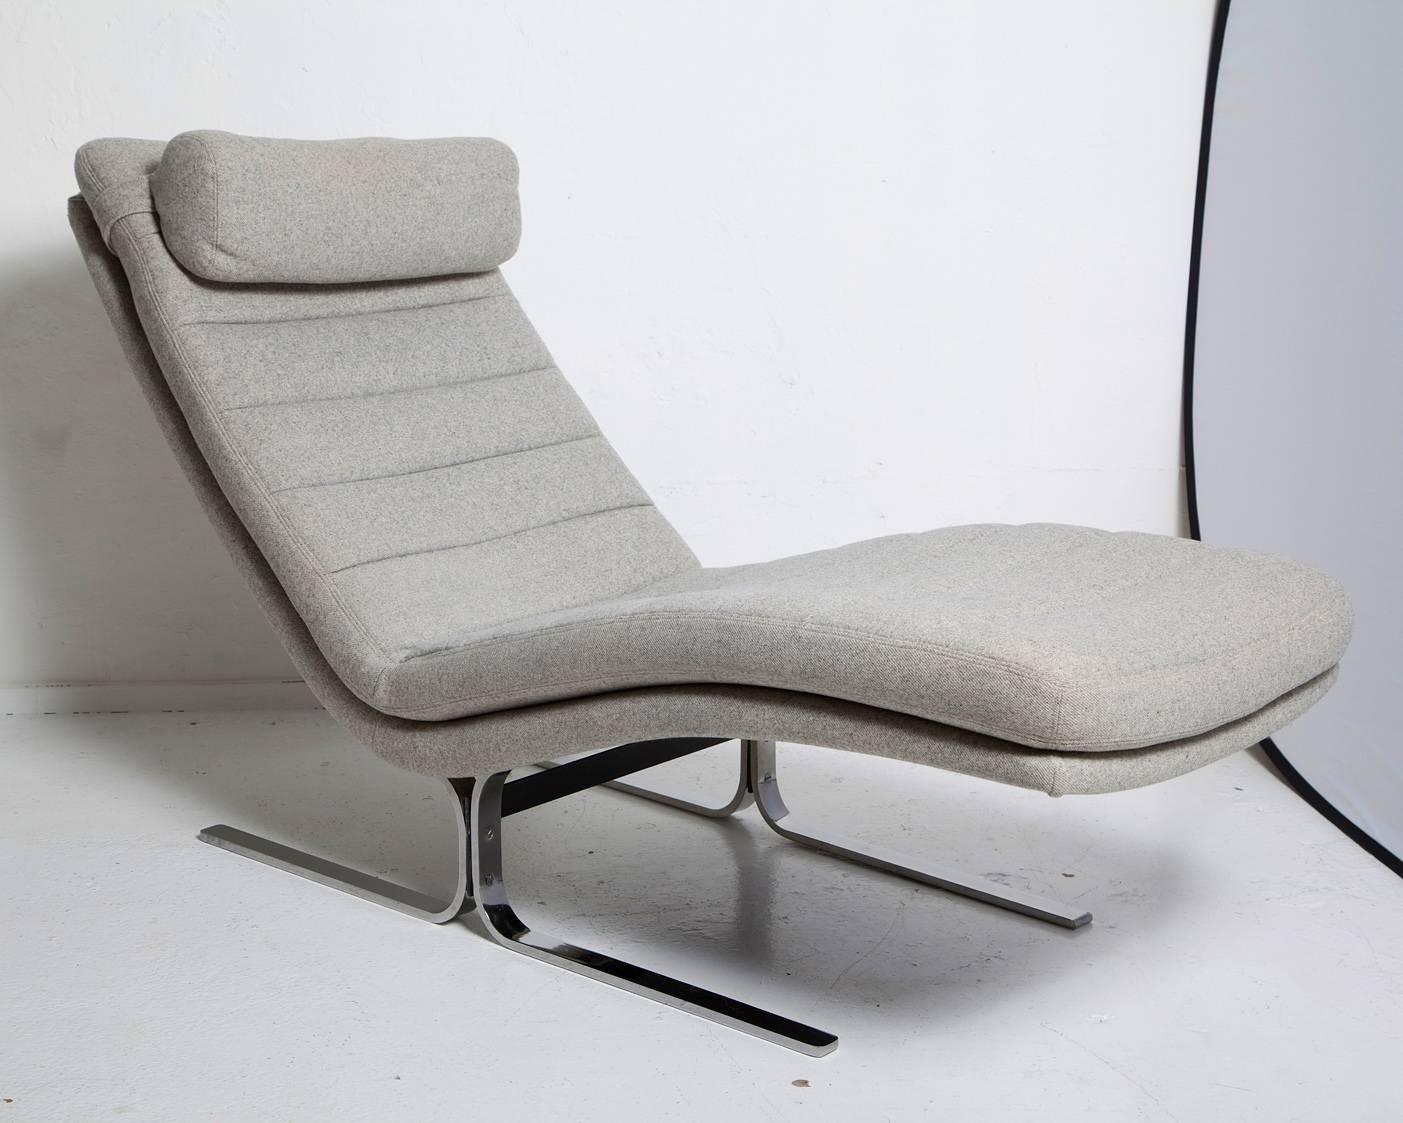 Mid-Century Modern 1970s Chromed Steel Chaise Longue by Brayton International